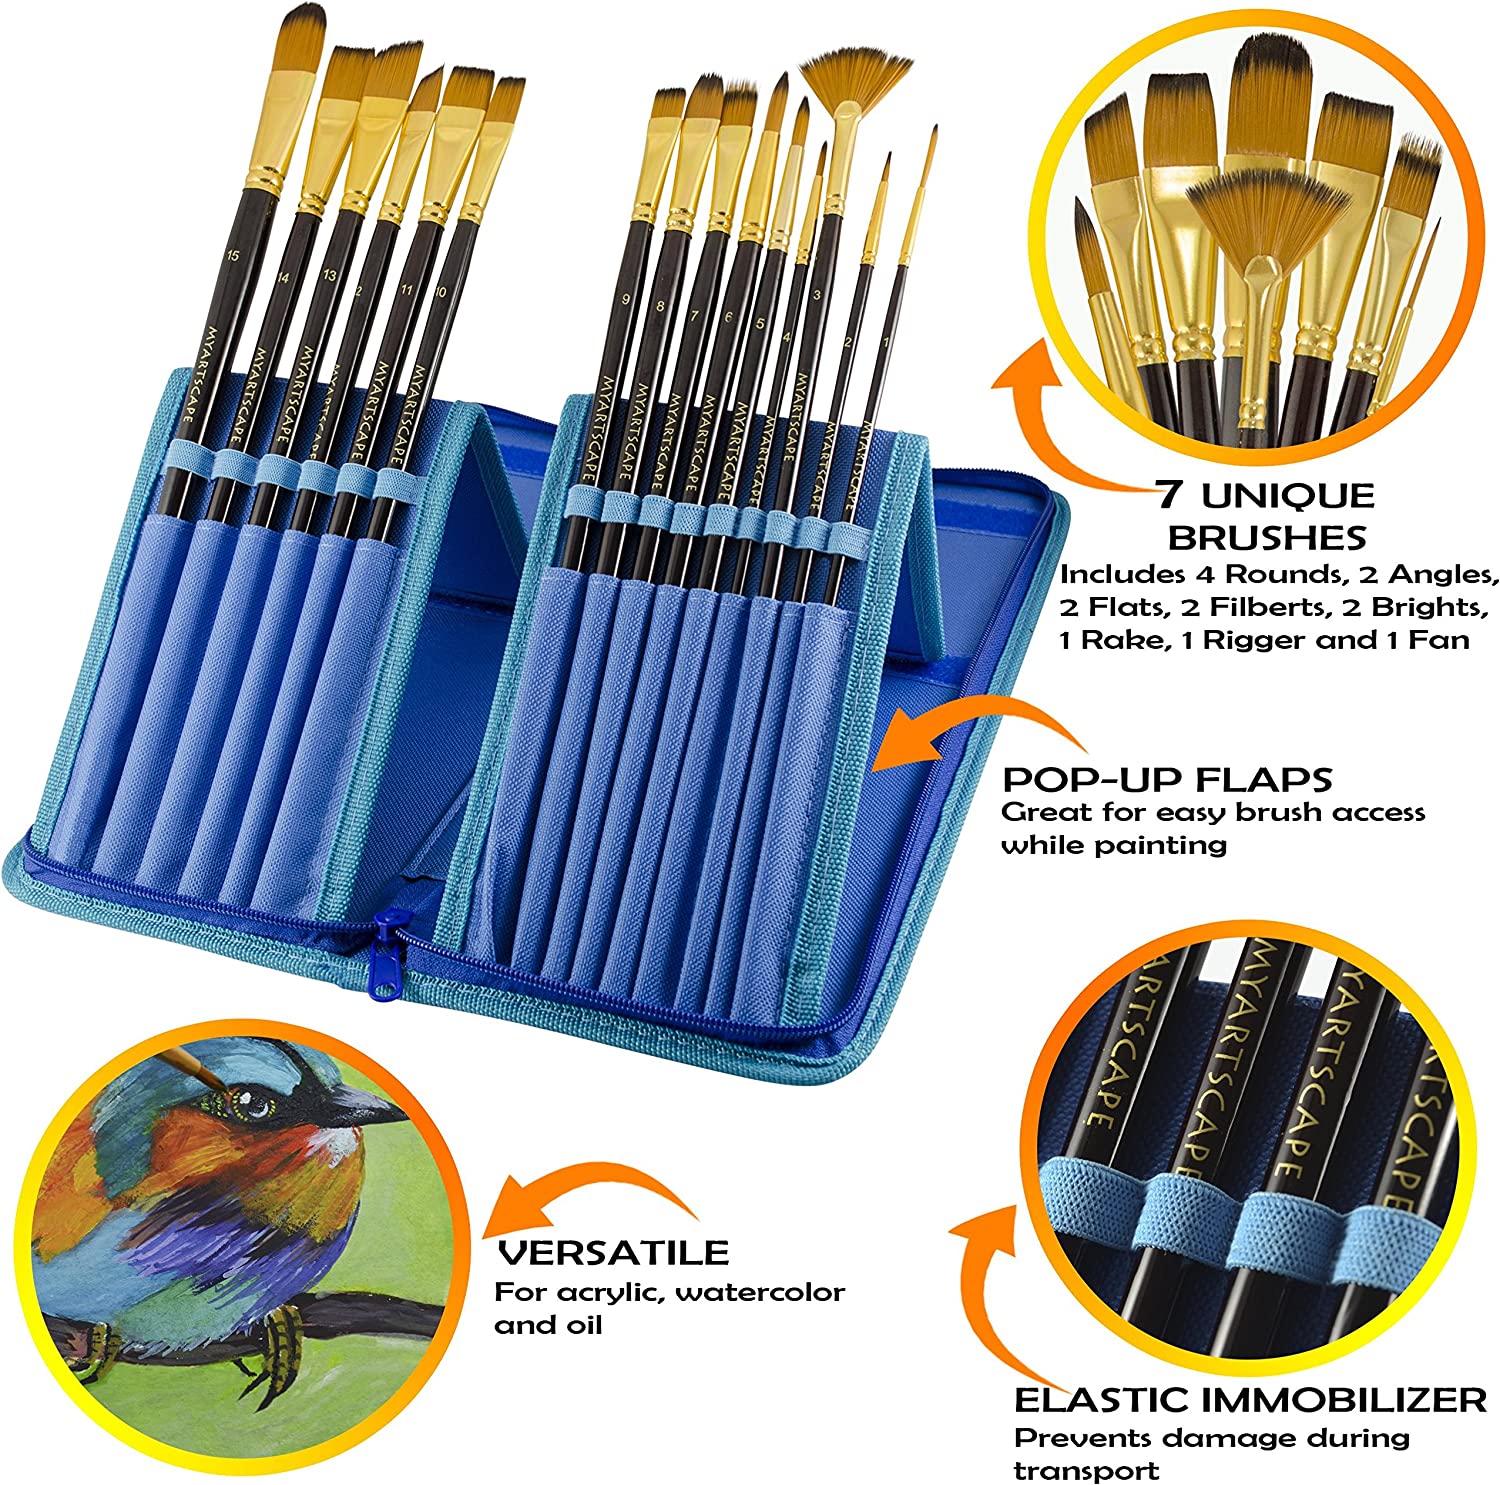 MyArtscape Paint Brushes features